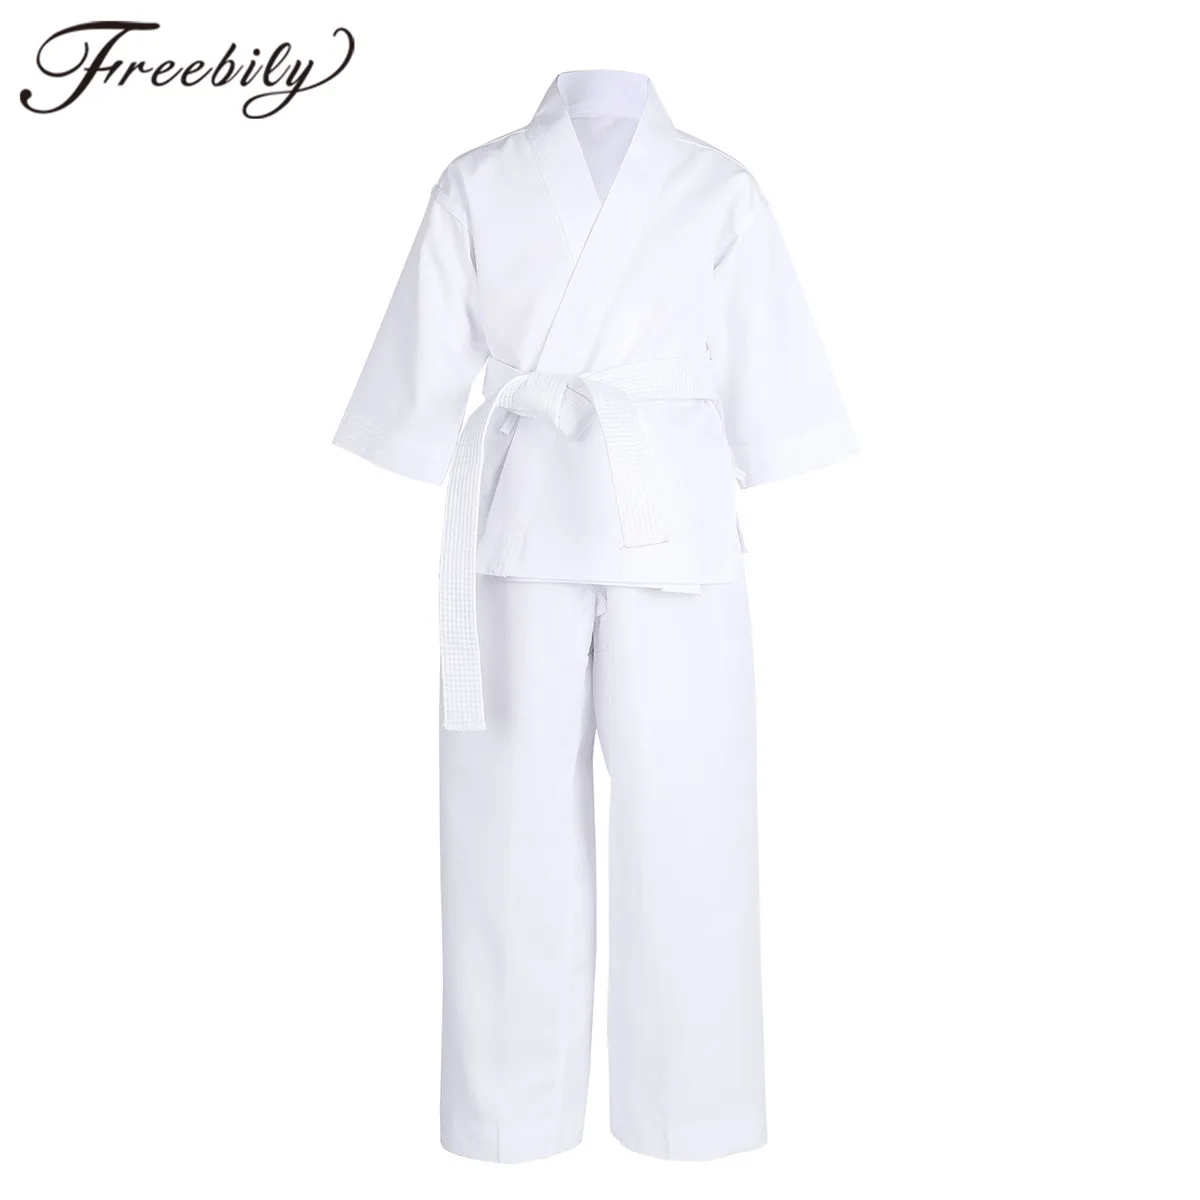 Karate Gi Uniform Suit Martial Arts Adult Lightweight Kids Belt Outfit White 